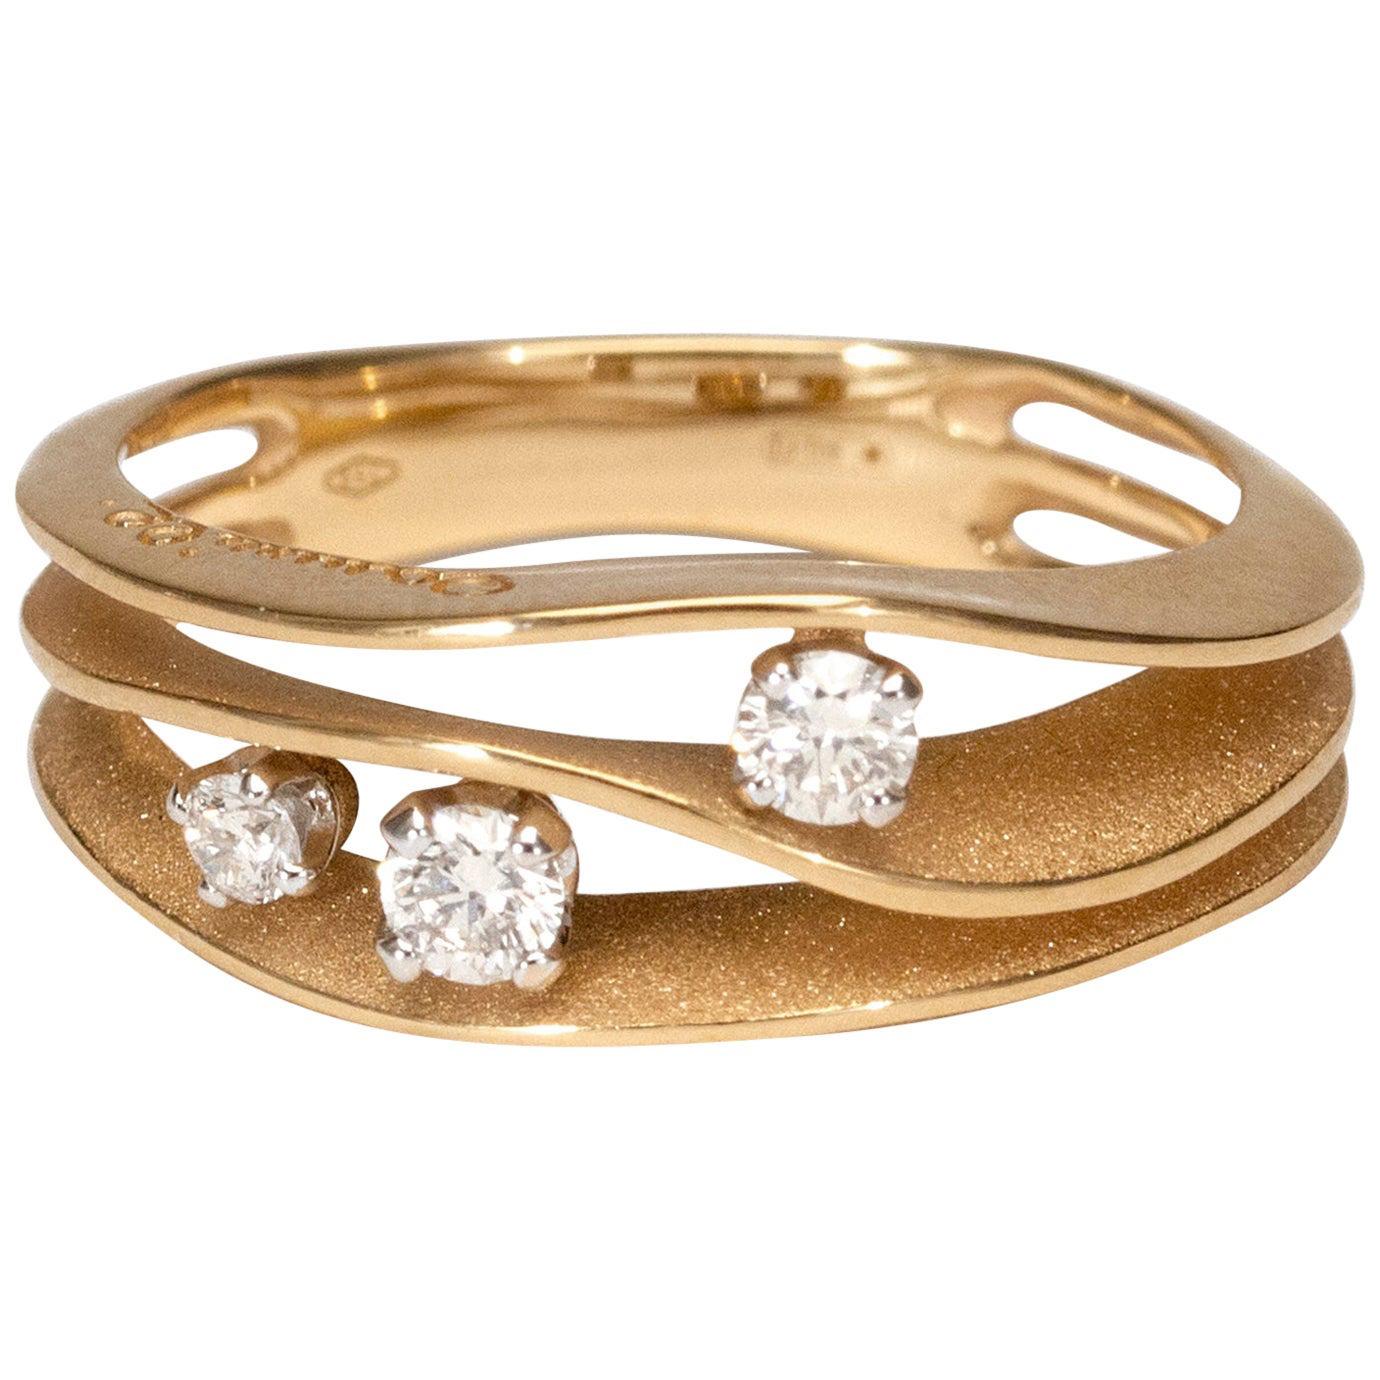 For Sale:  Annamaria Cammilli "Dune" Ring with Three Diamonds in 18k Orange Apricot Gold